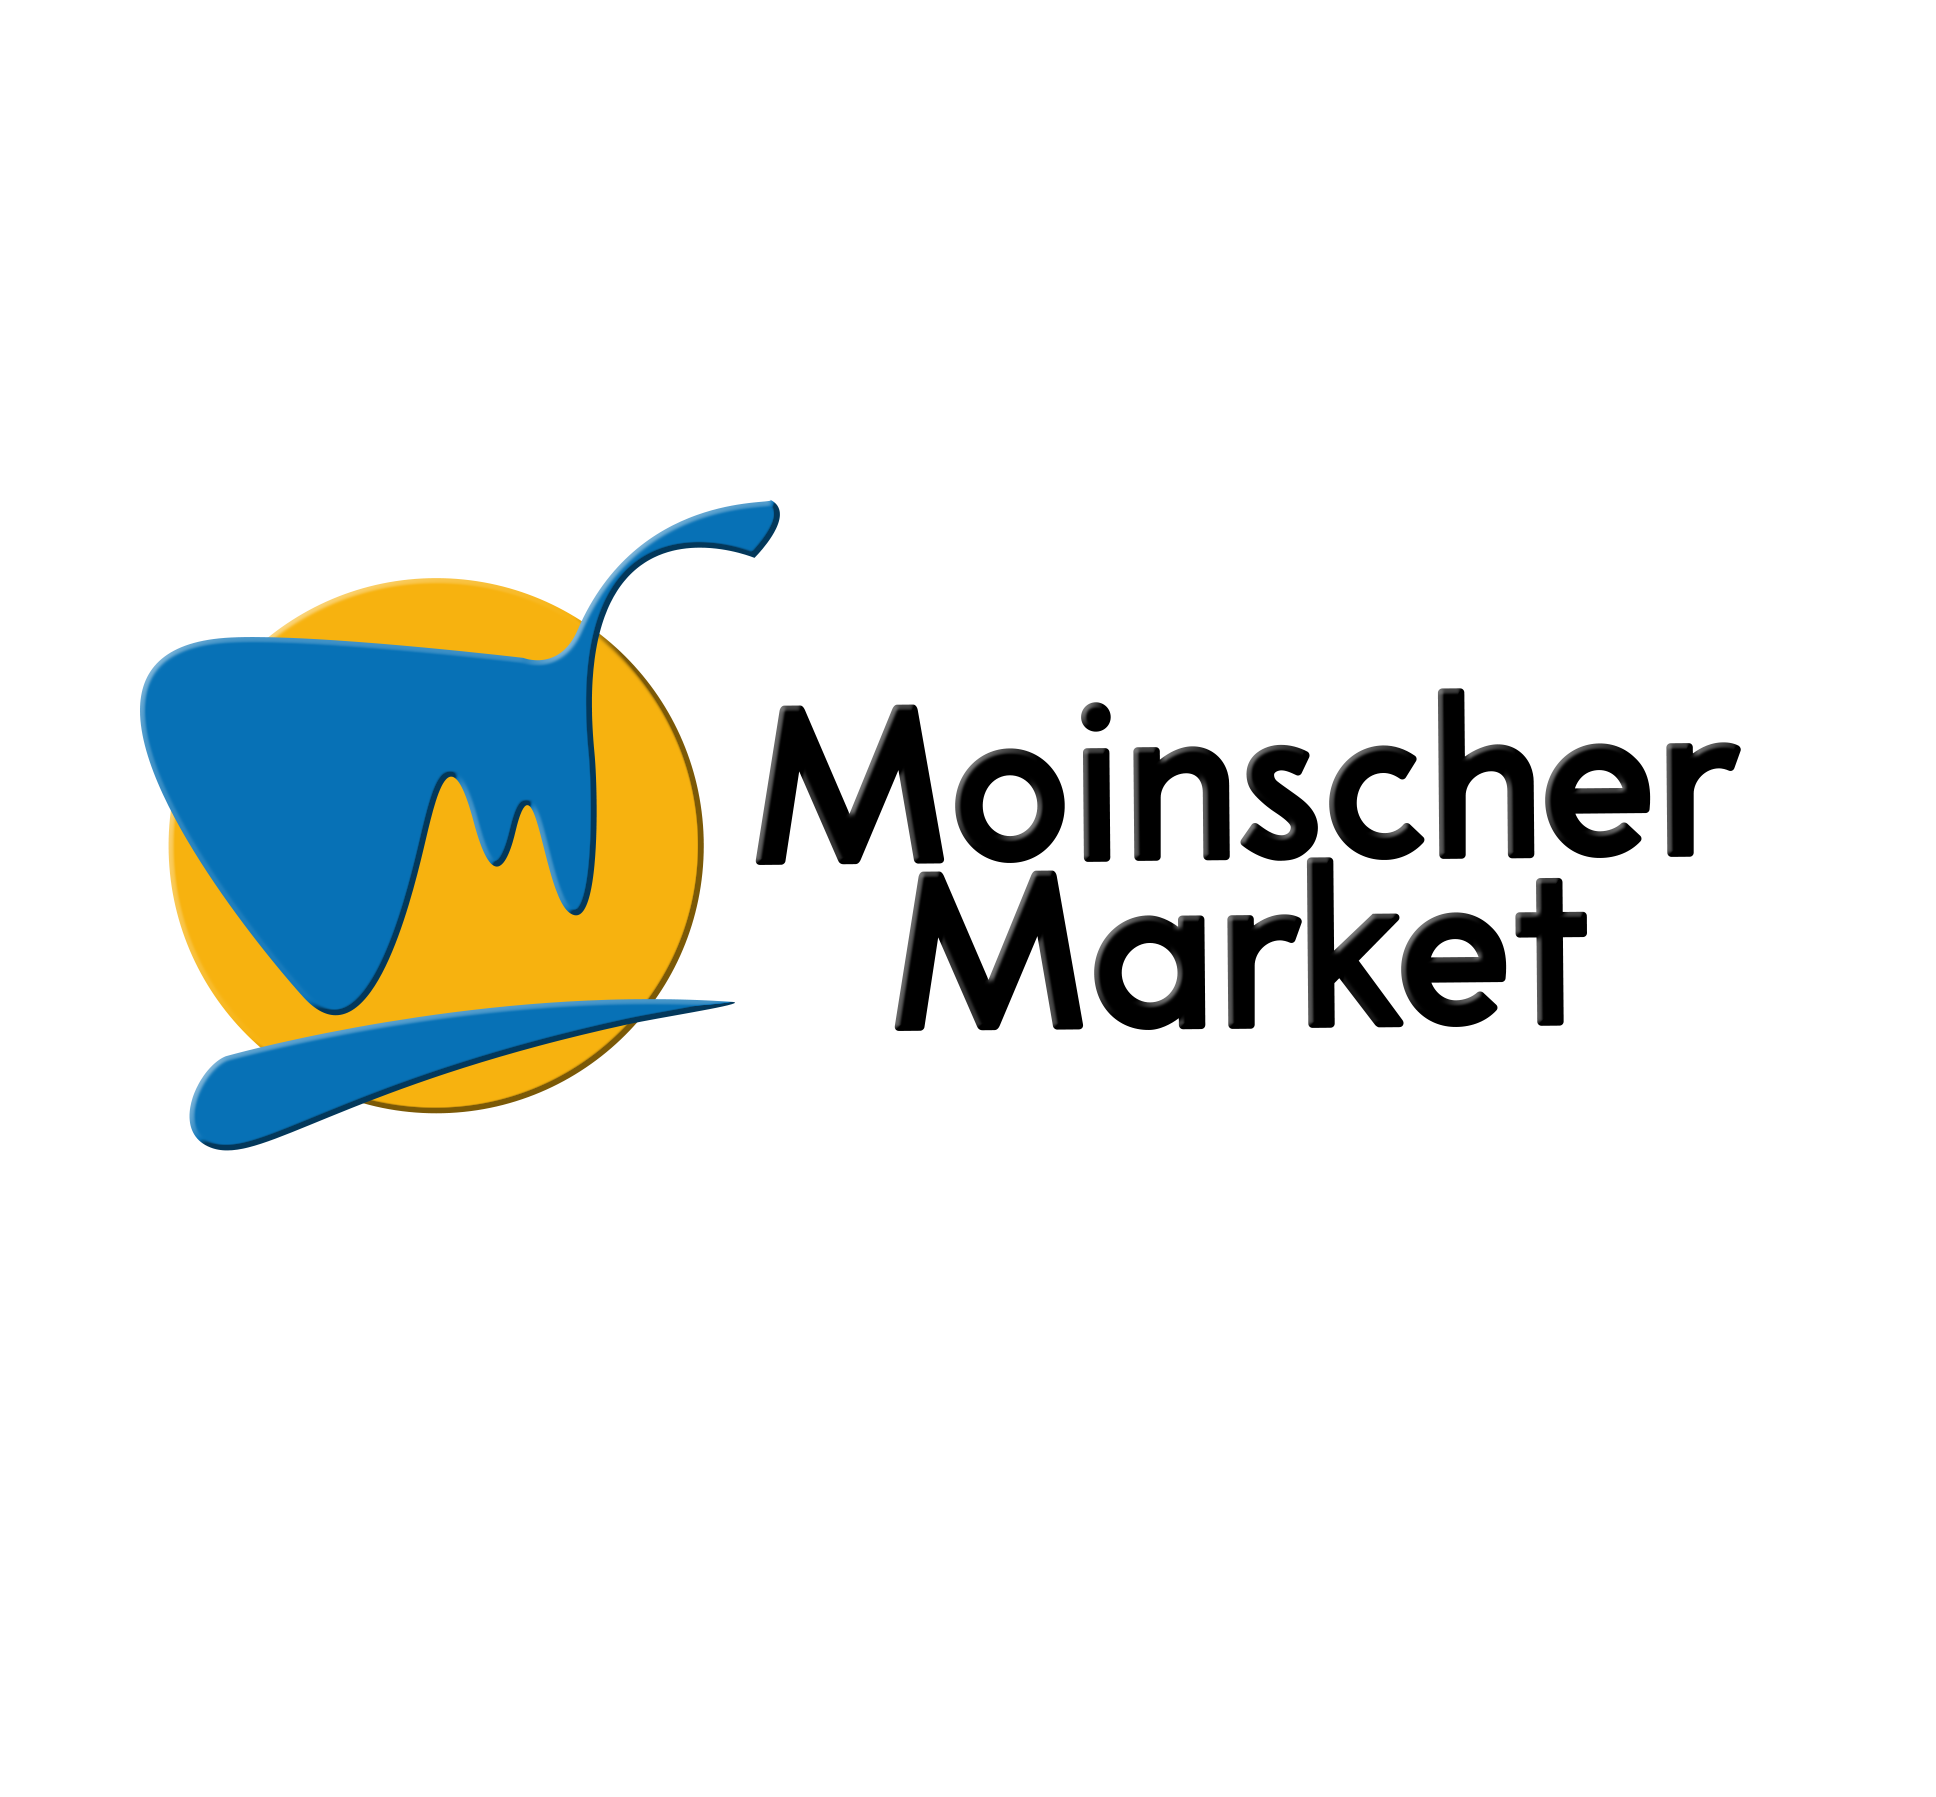 MoinscherMarket